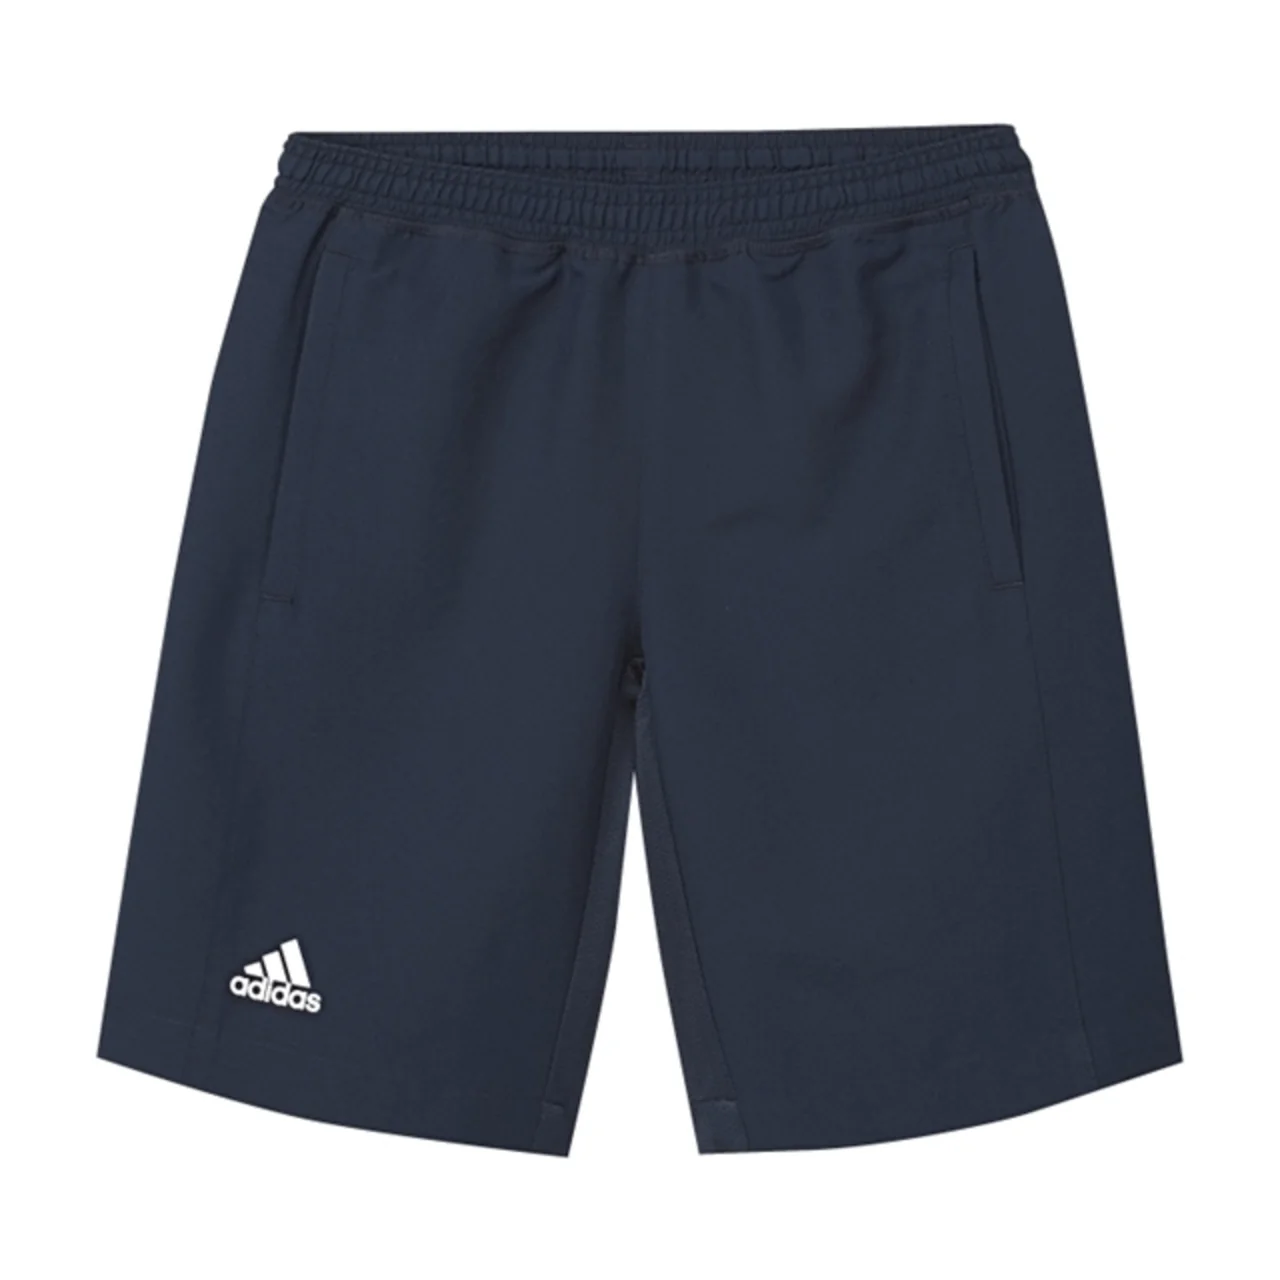 Adidas T16 Shorts Boys Navy